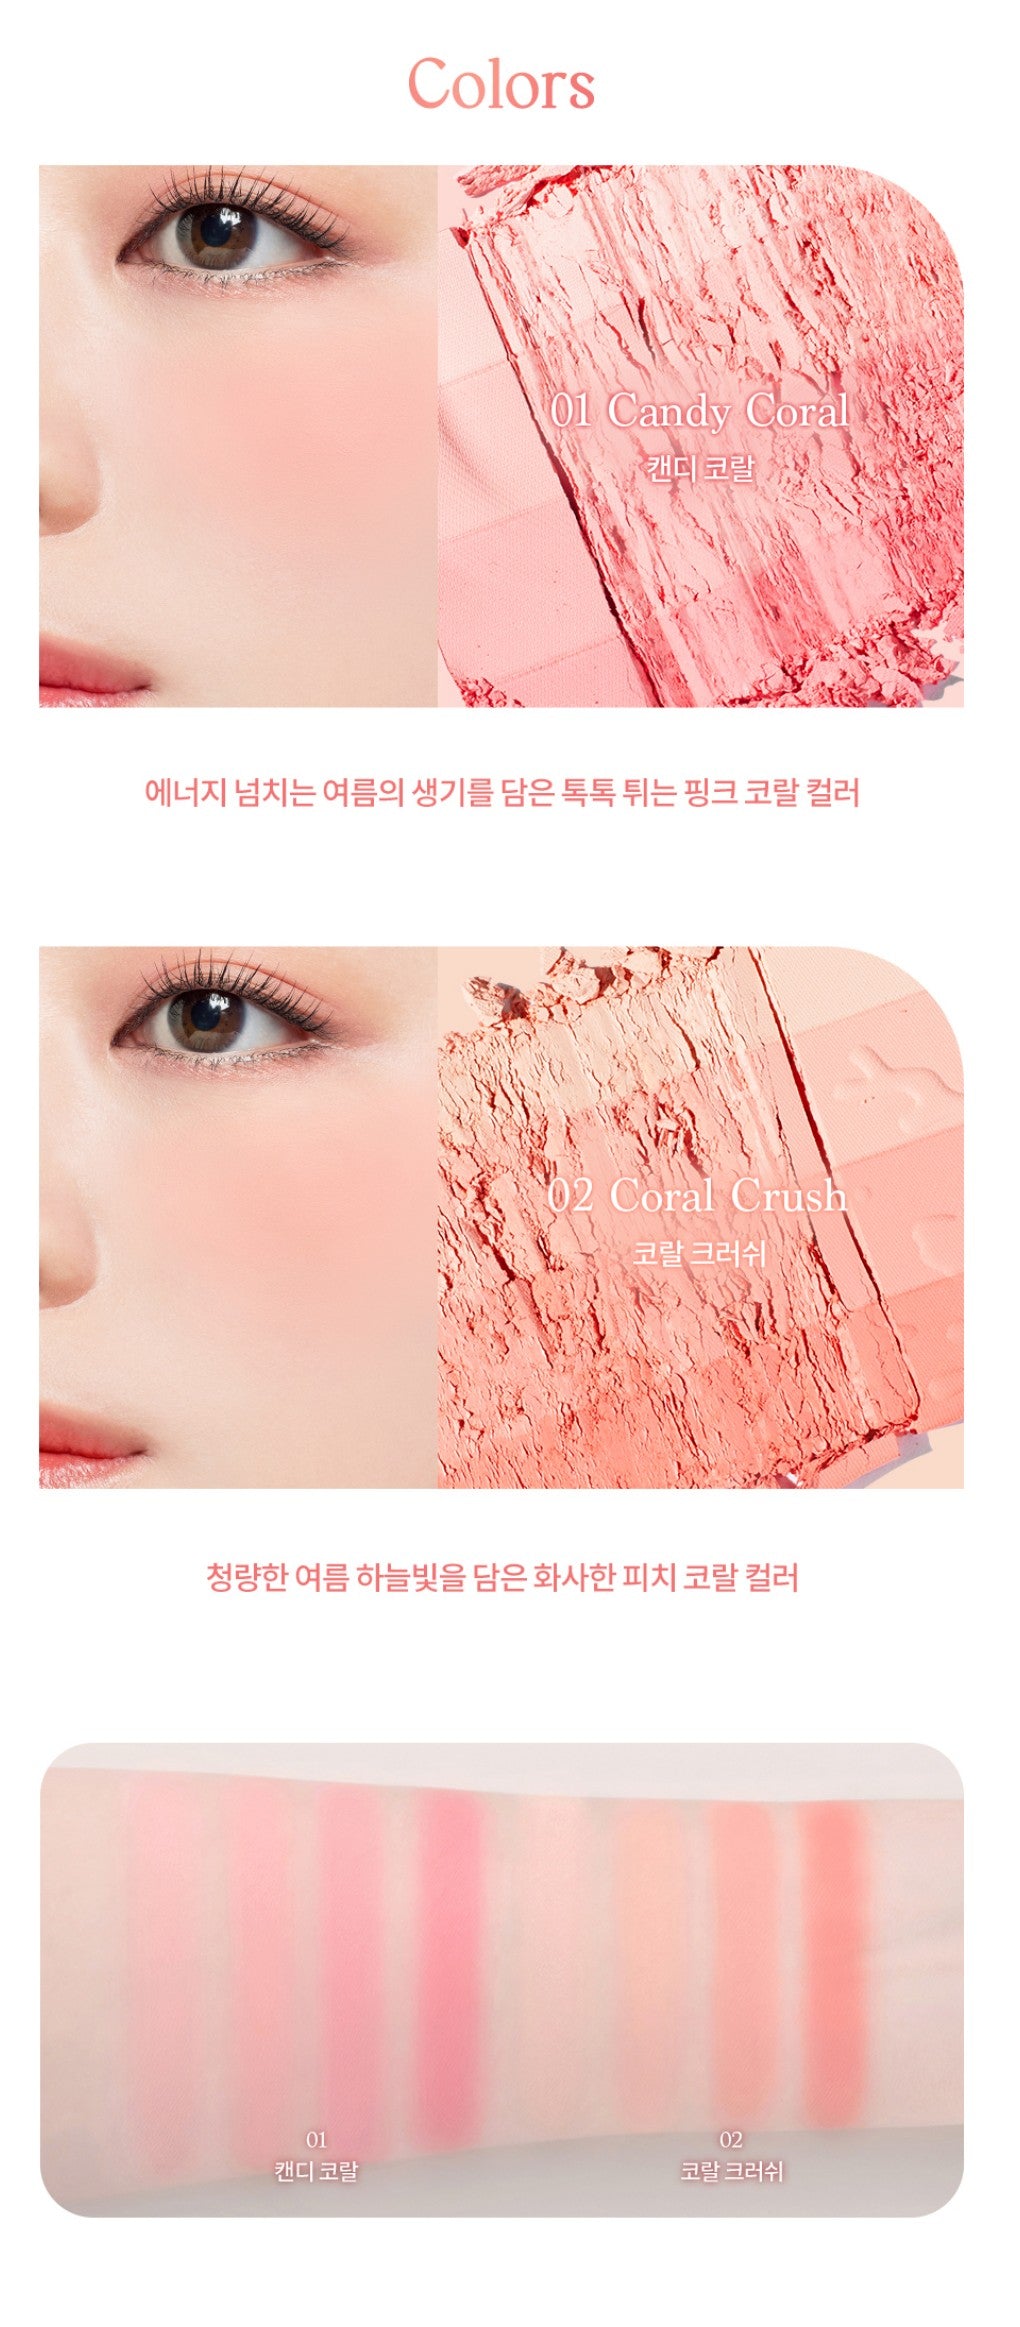 [Dasique] Summer Coral Collection '23 Layer Cheek 01 + mini lip gloss